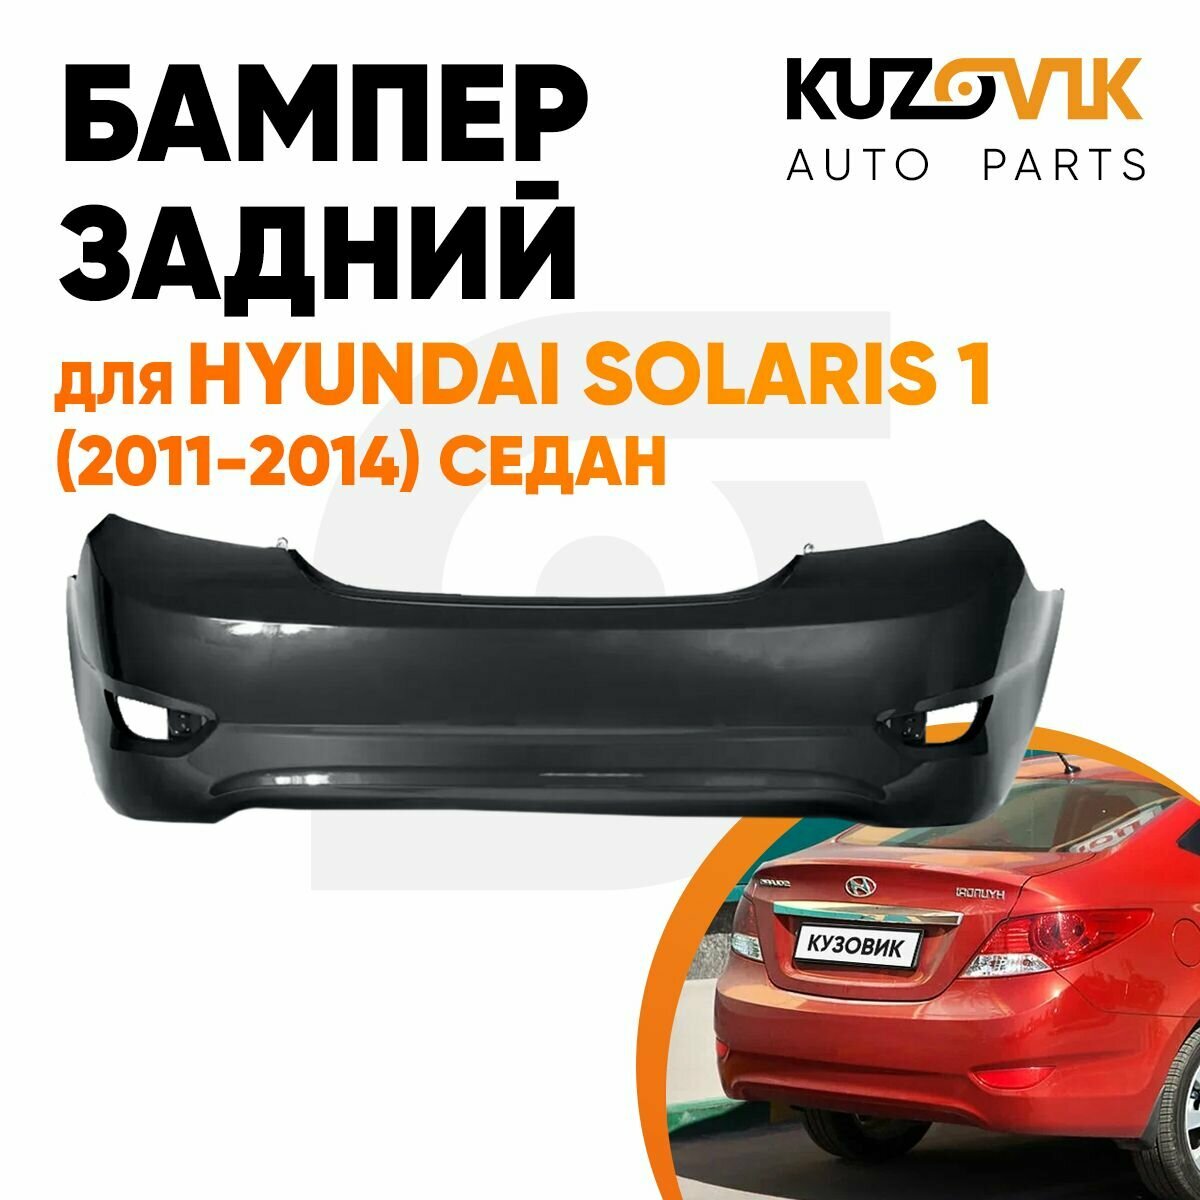 Бампер задний для Хендай Солярис Hyundai Solaris 1 (2011-2014) седан новый под покраску